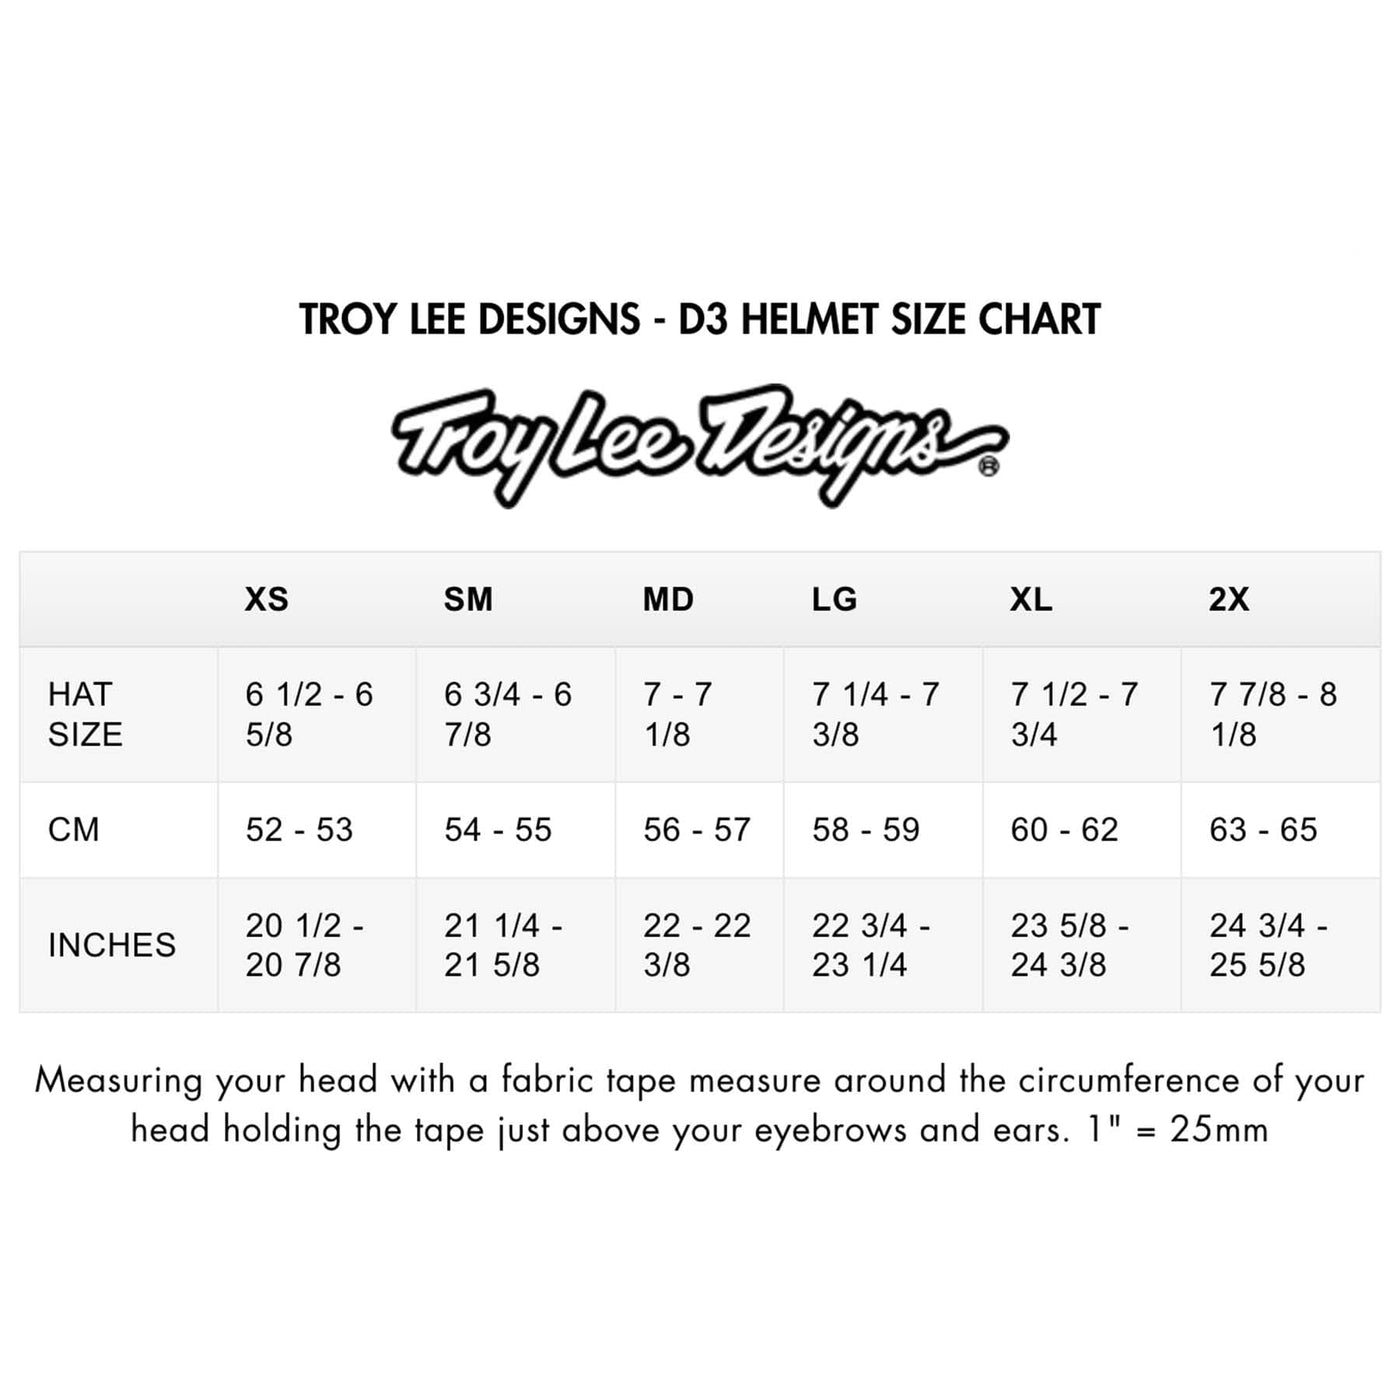 TROY LEE DESIGNS - D3 HELMET SIZE CHART